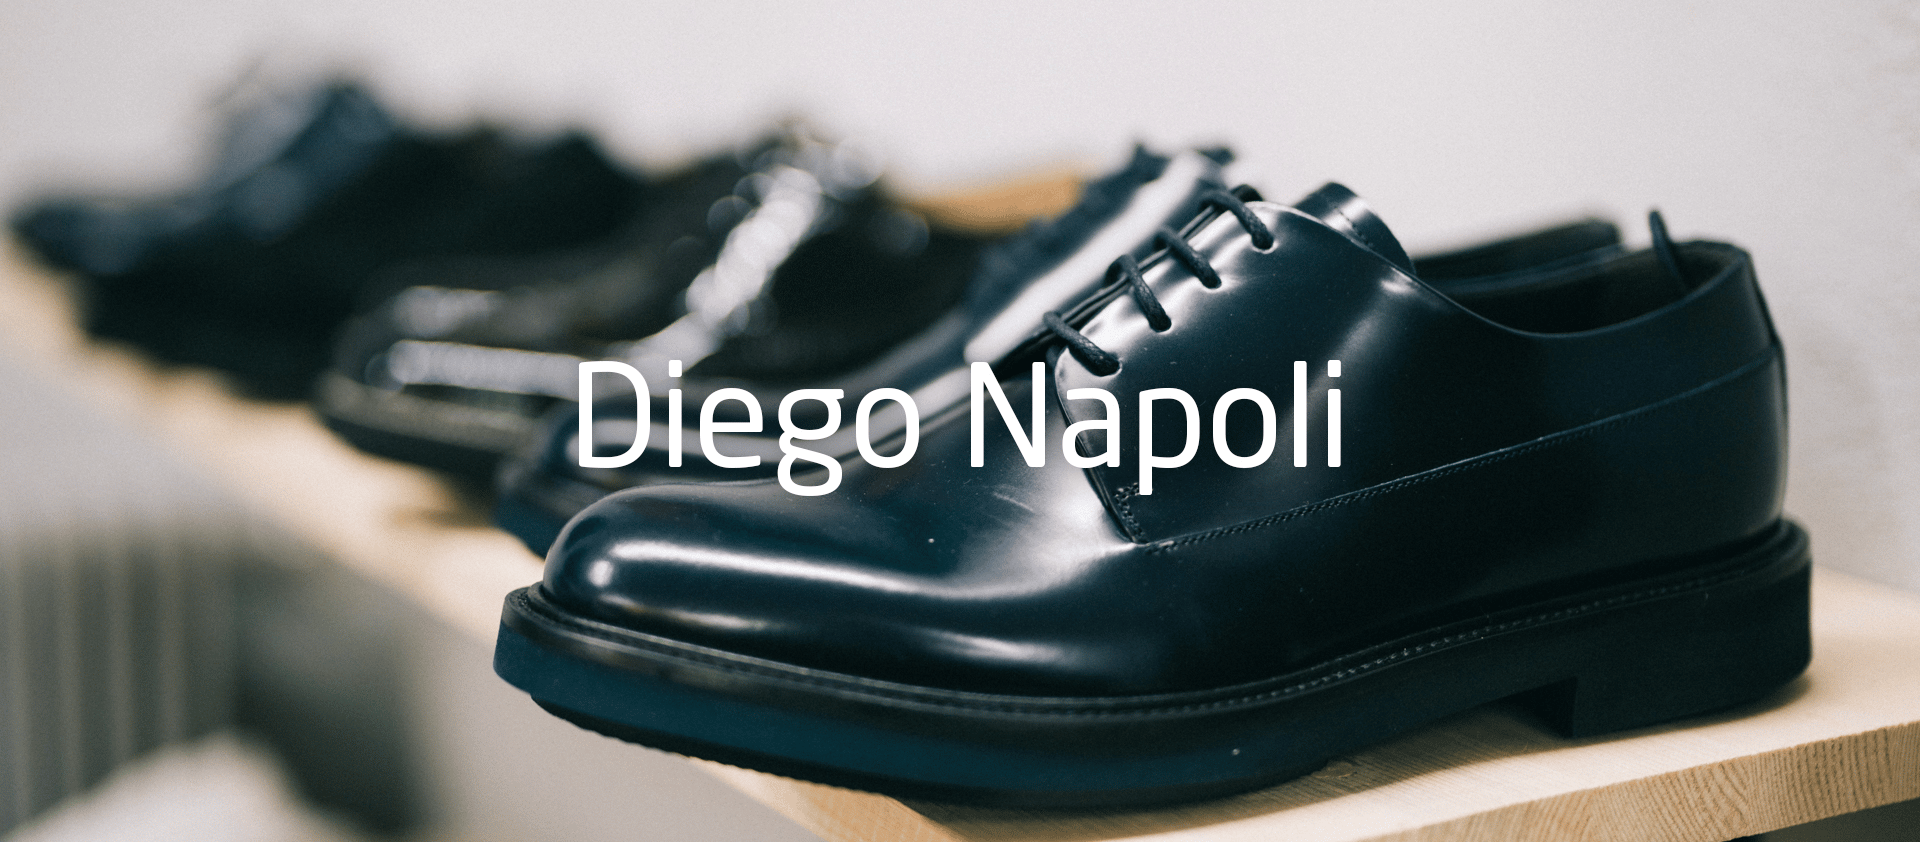 Rencontre avec Nicolas, responsable de la boutique Diego Napoli.